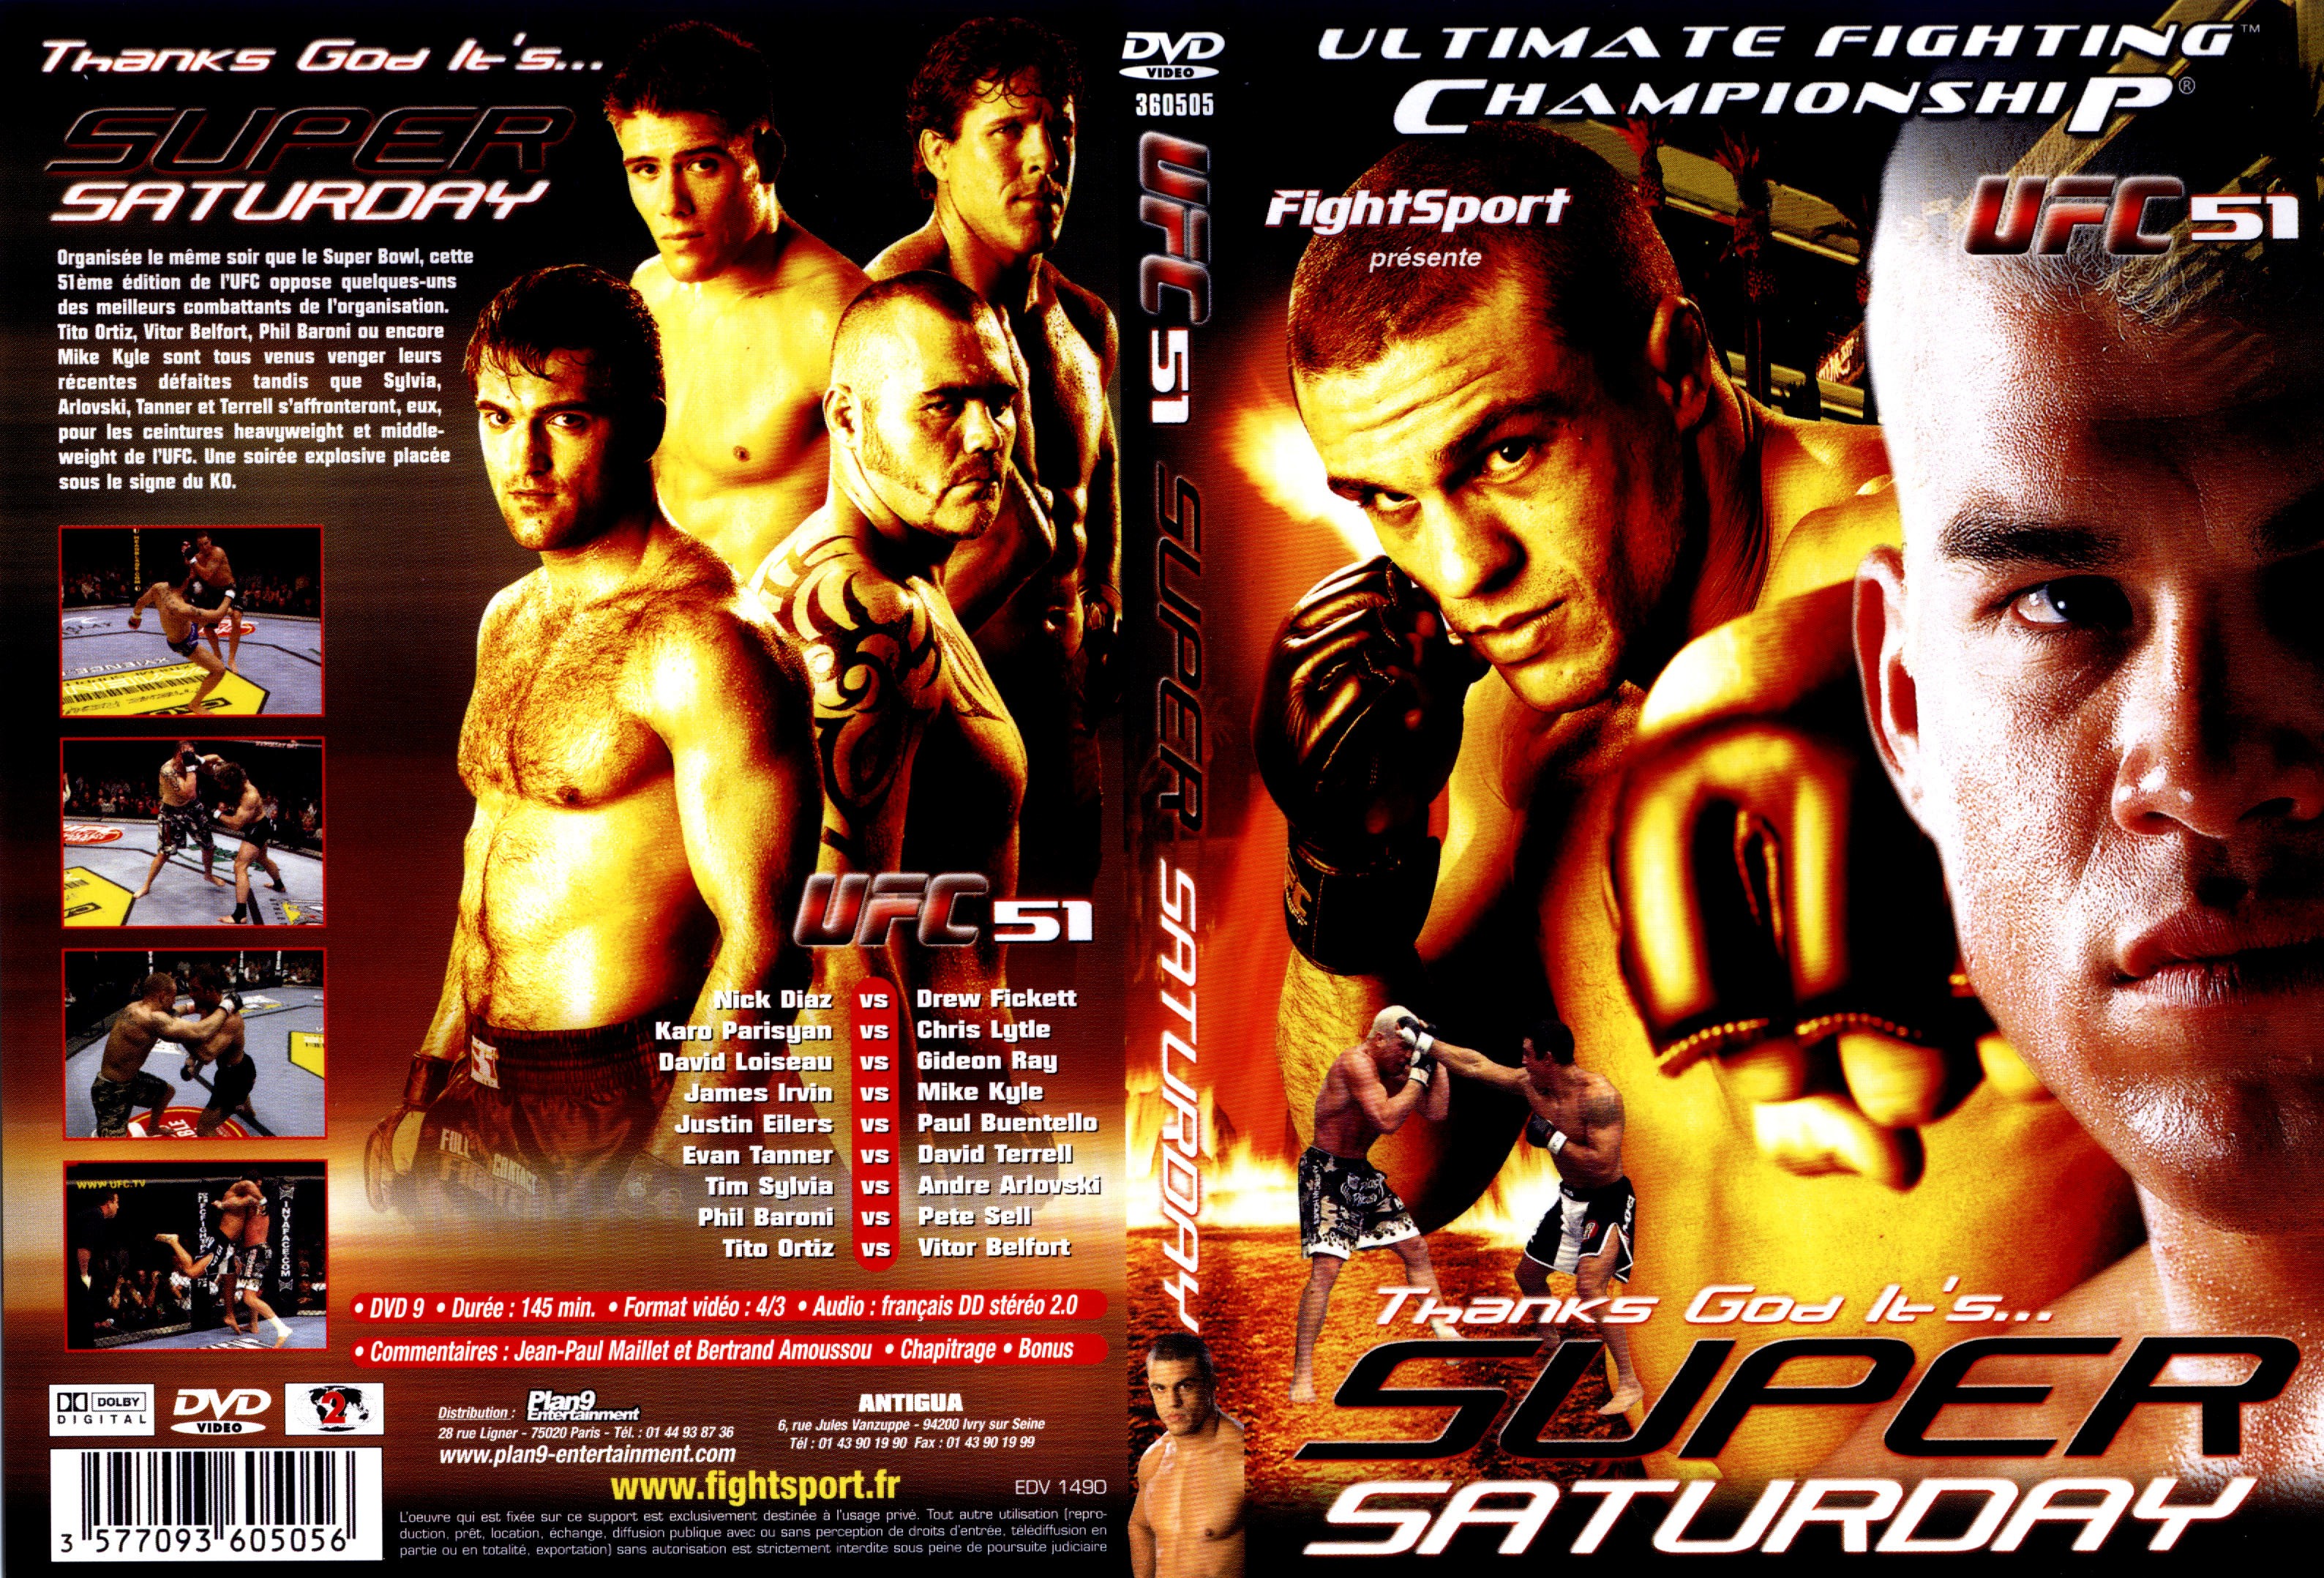 Jaquette DVD UFC 51 Super Saturday